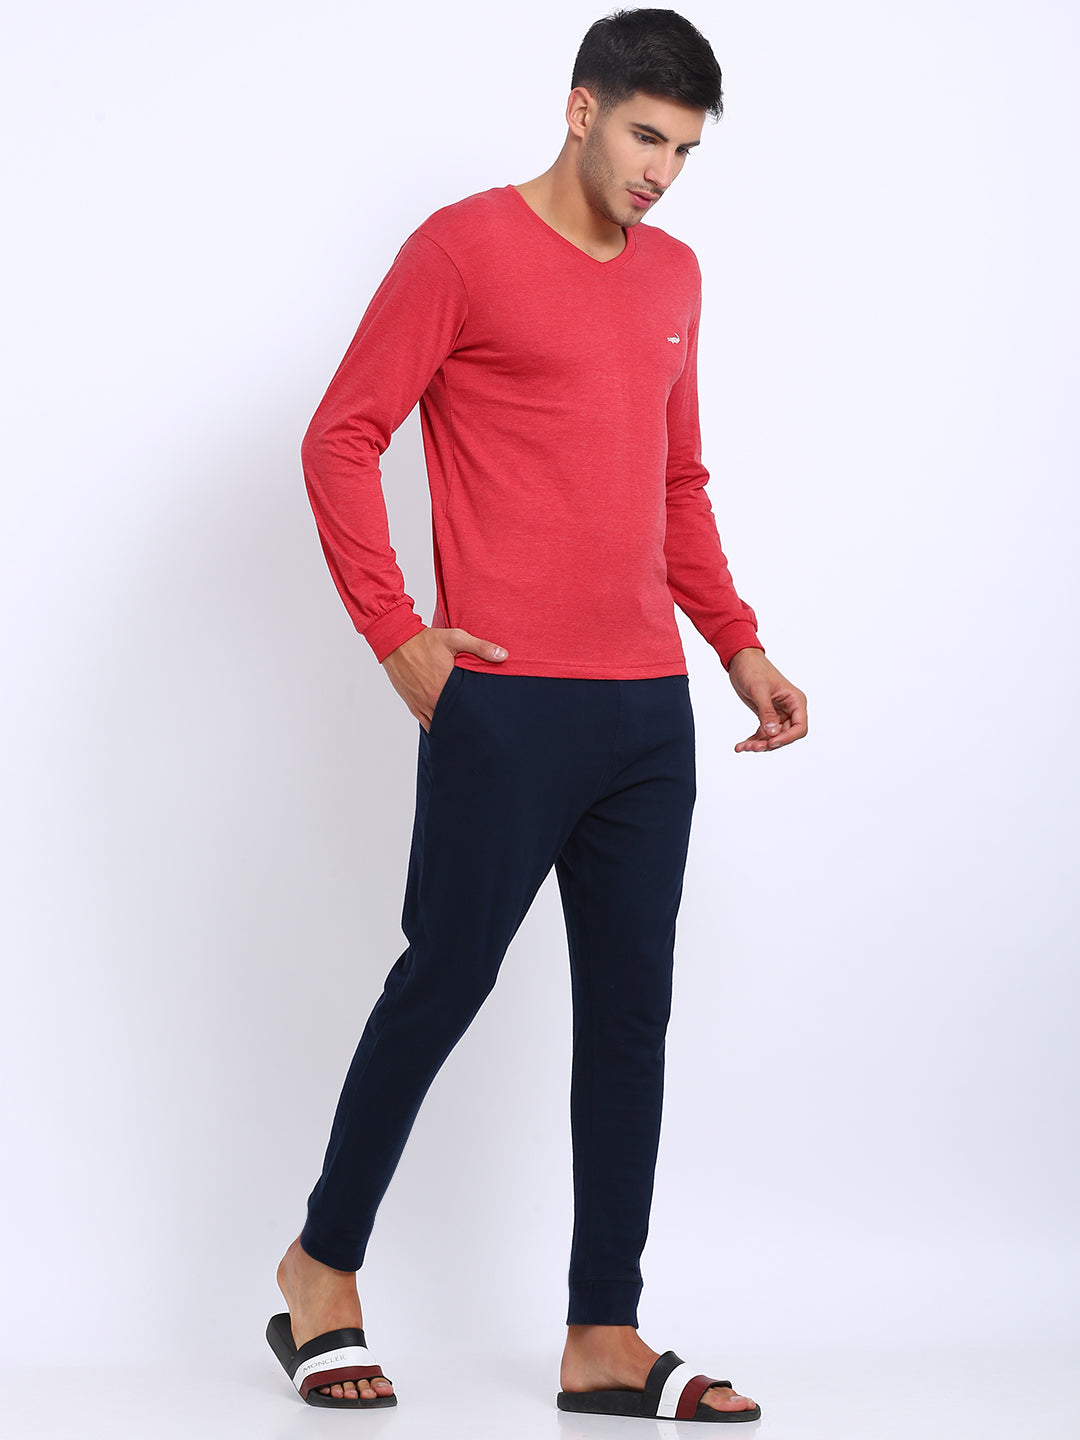 Men's Solid V Neck Full Sleeve Cotton T-Shirt - RED MELANGE